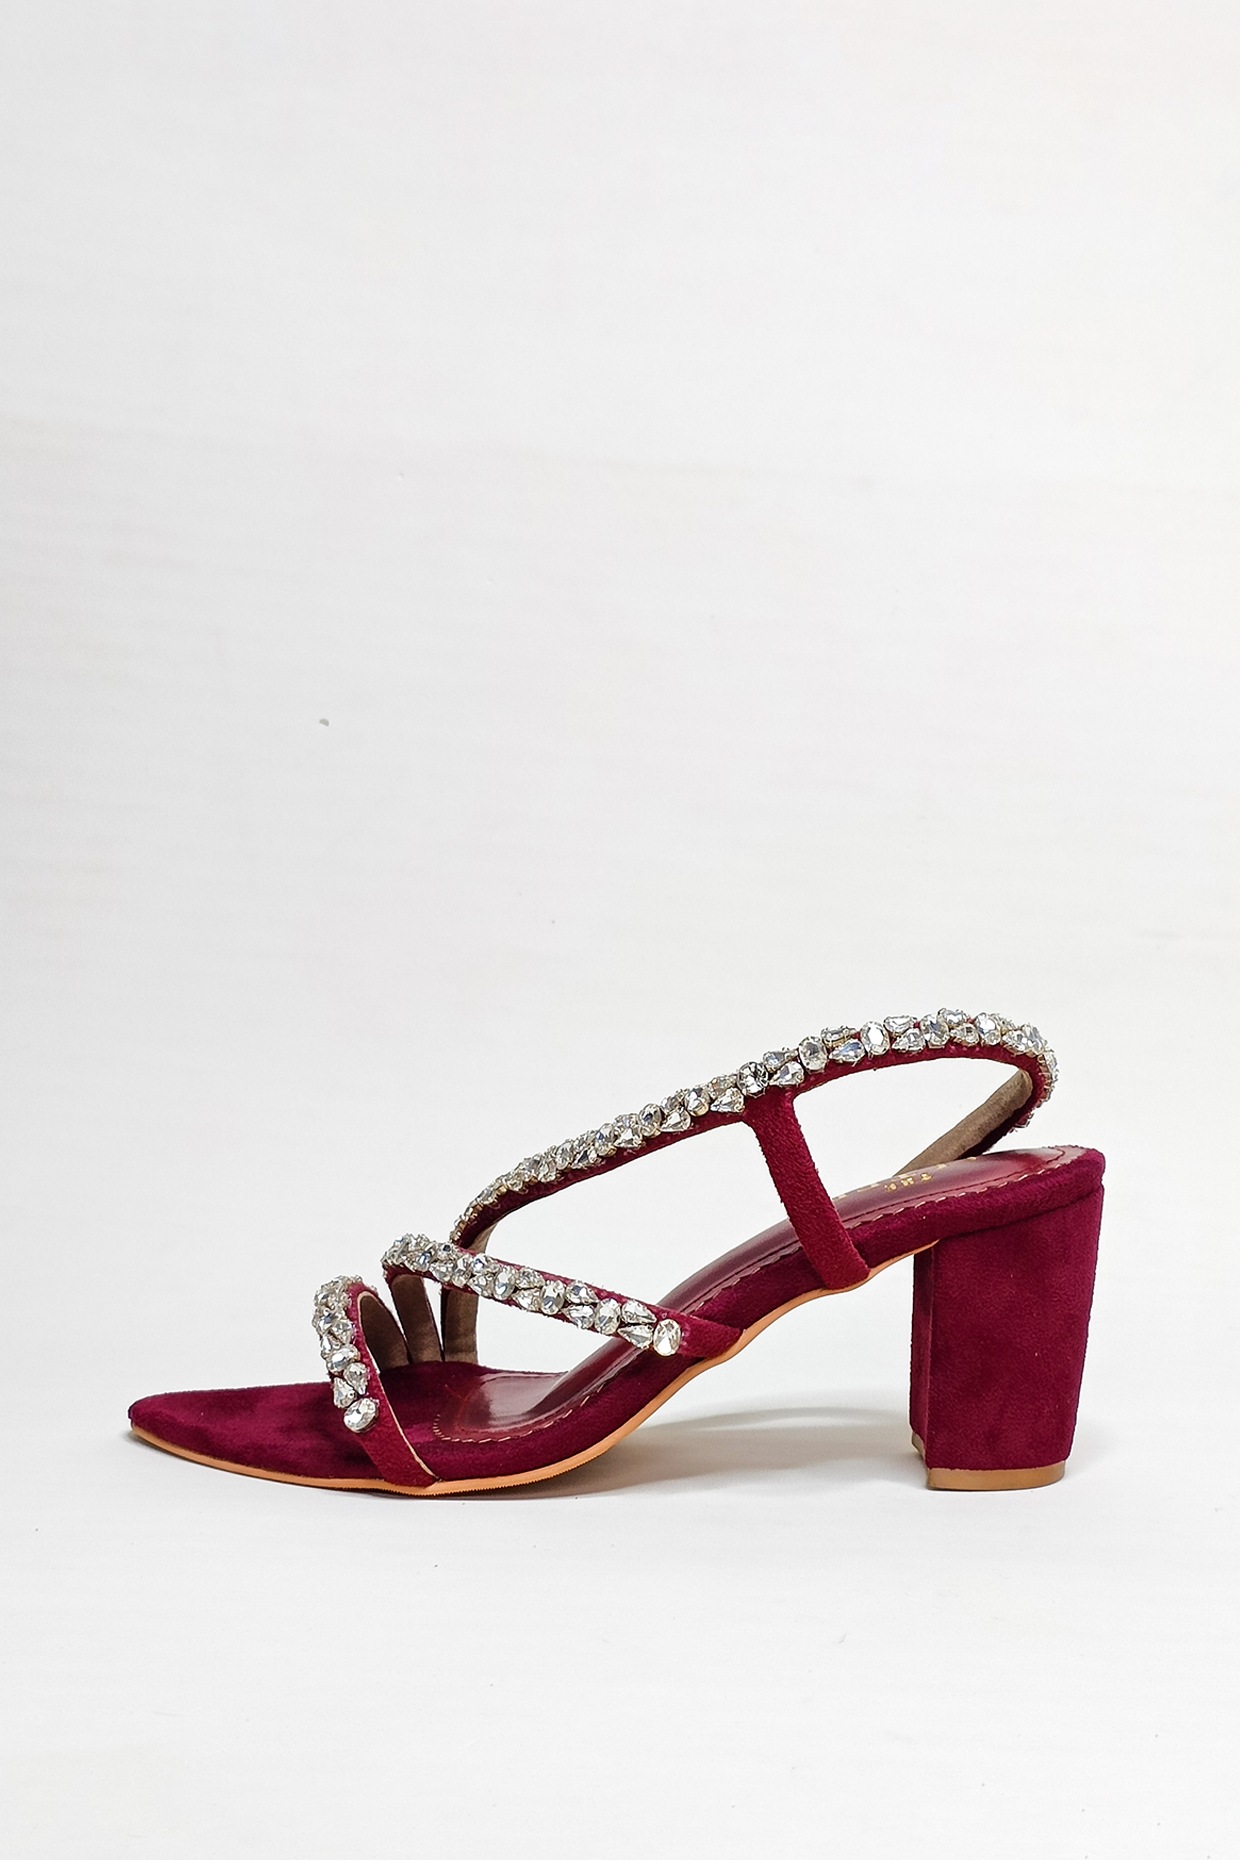 Buy Flat n Heels Womens Maroon Sandals FnH 1161-MRN at Amazon.in